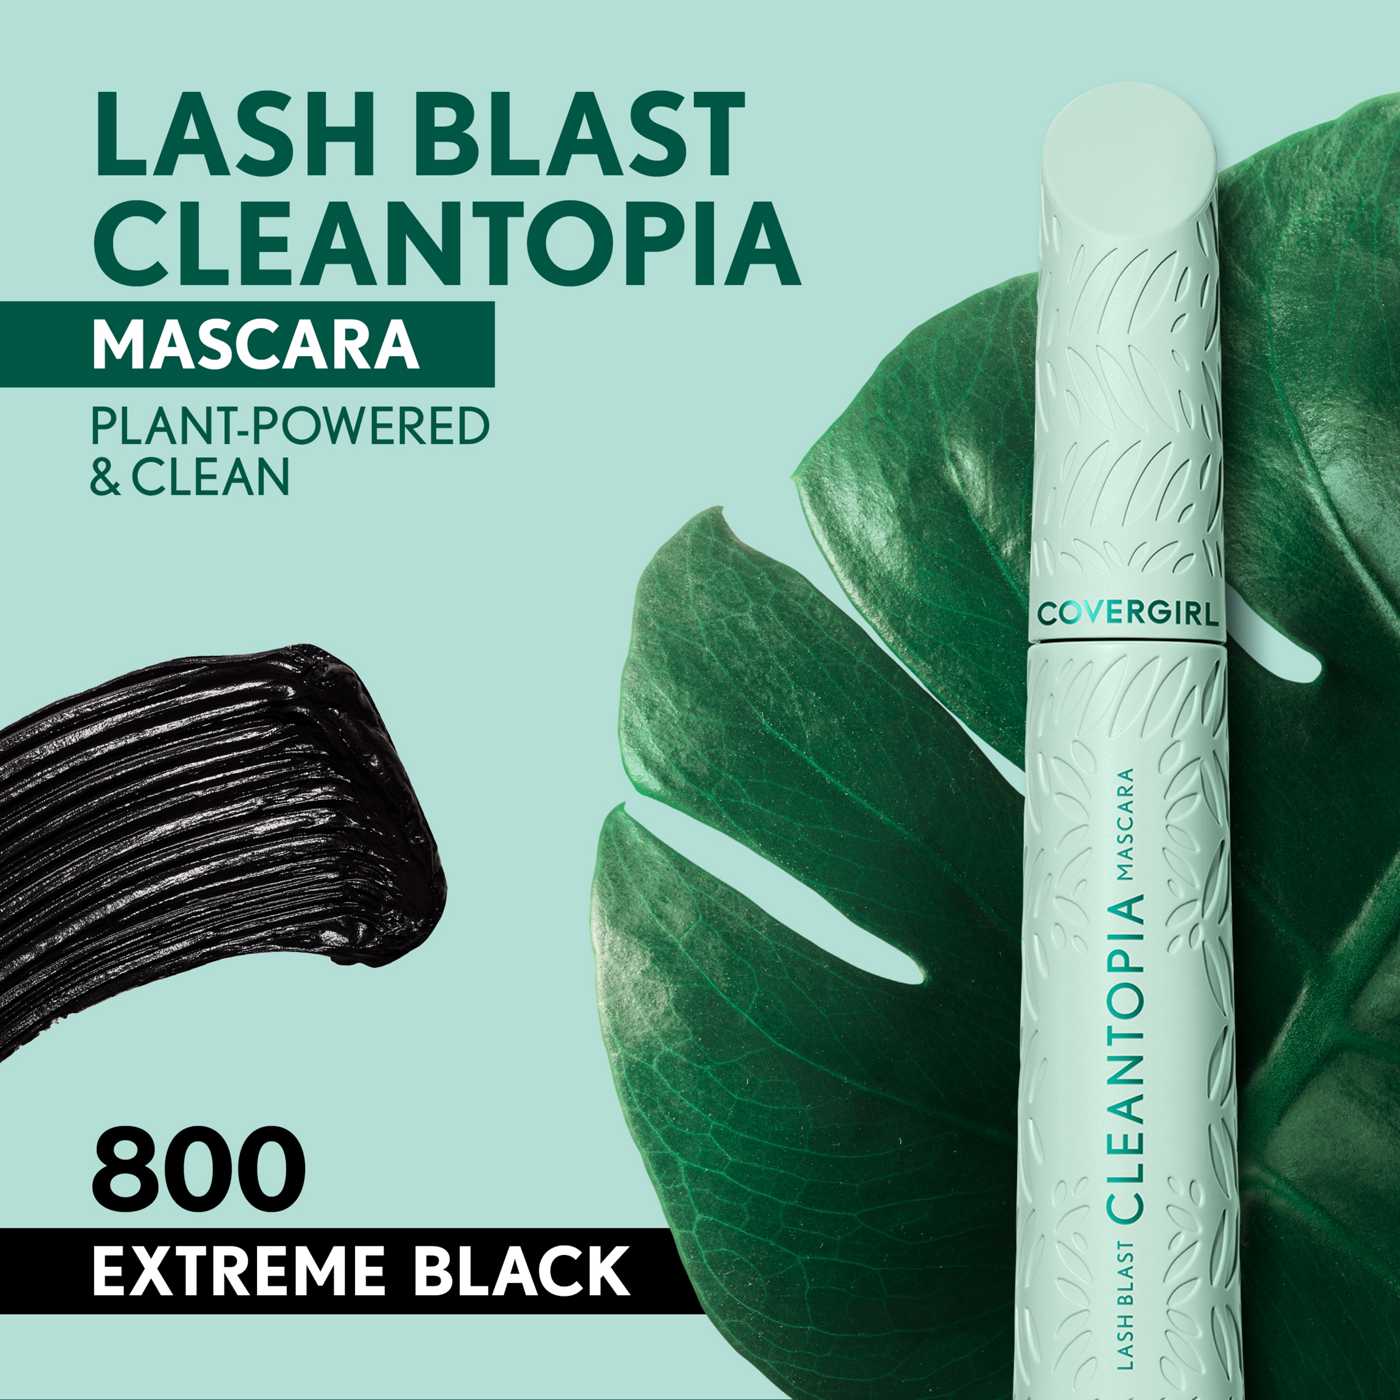 Covergirl Lash Blast Cleantopia Mascara - Extreme Black; image 2 of 15